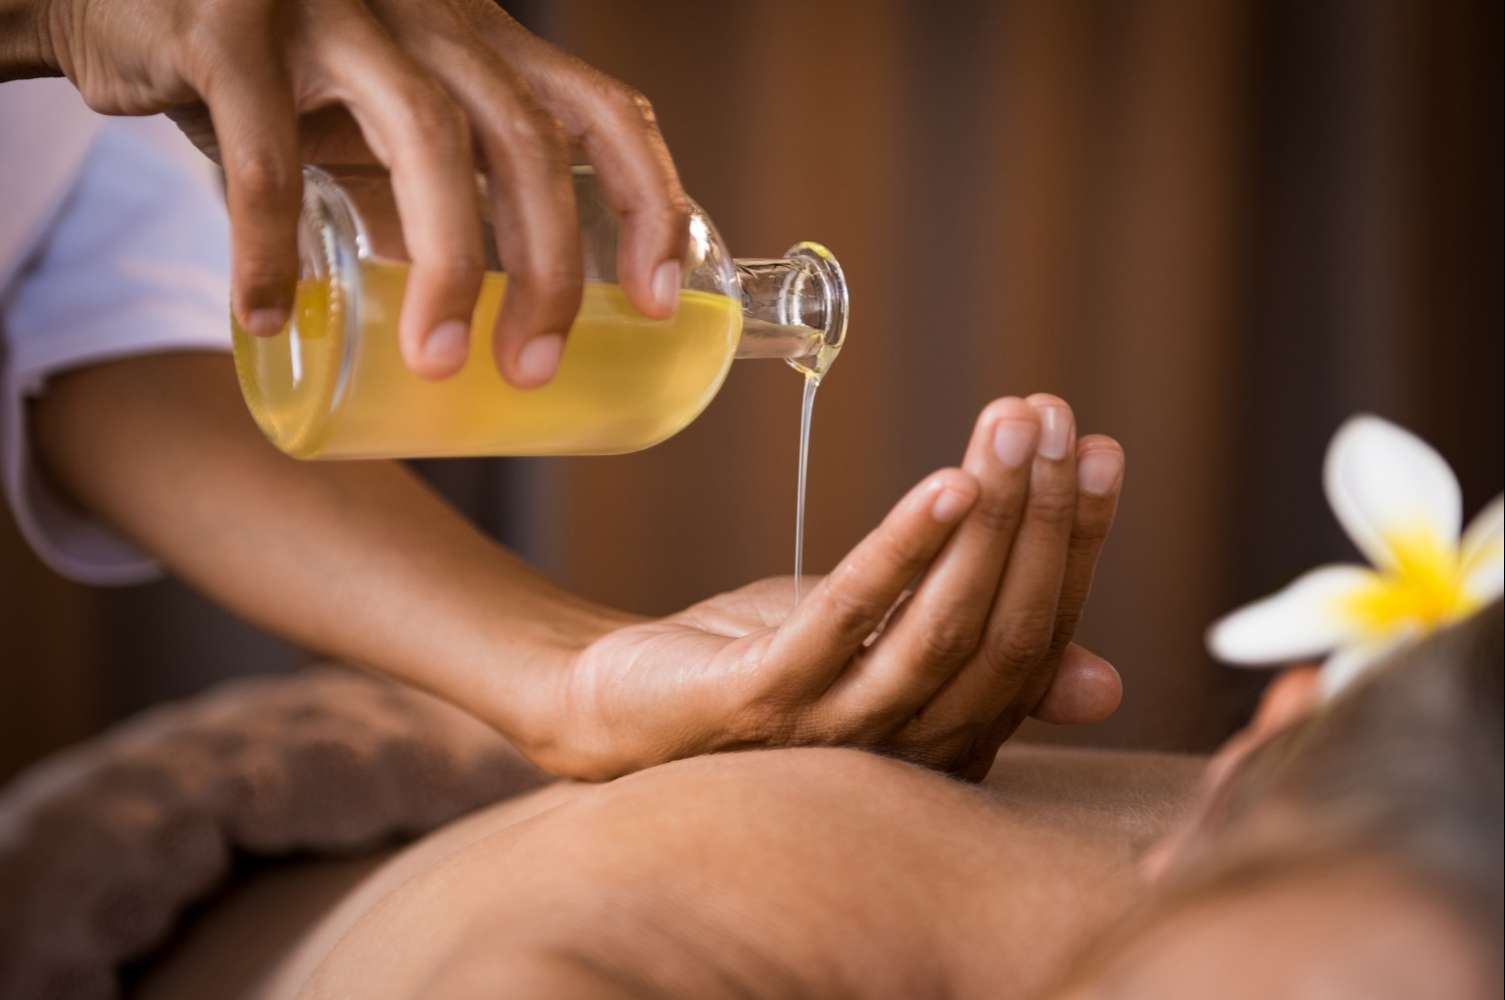 Massage bằng tinh dầu